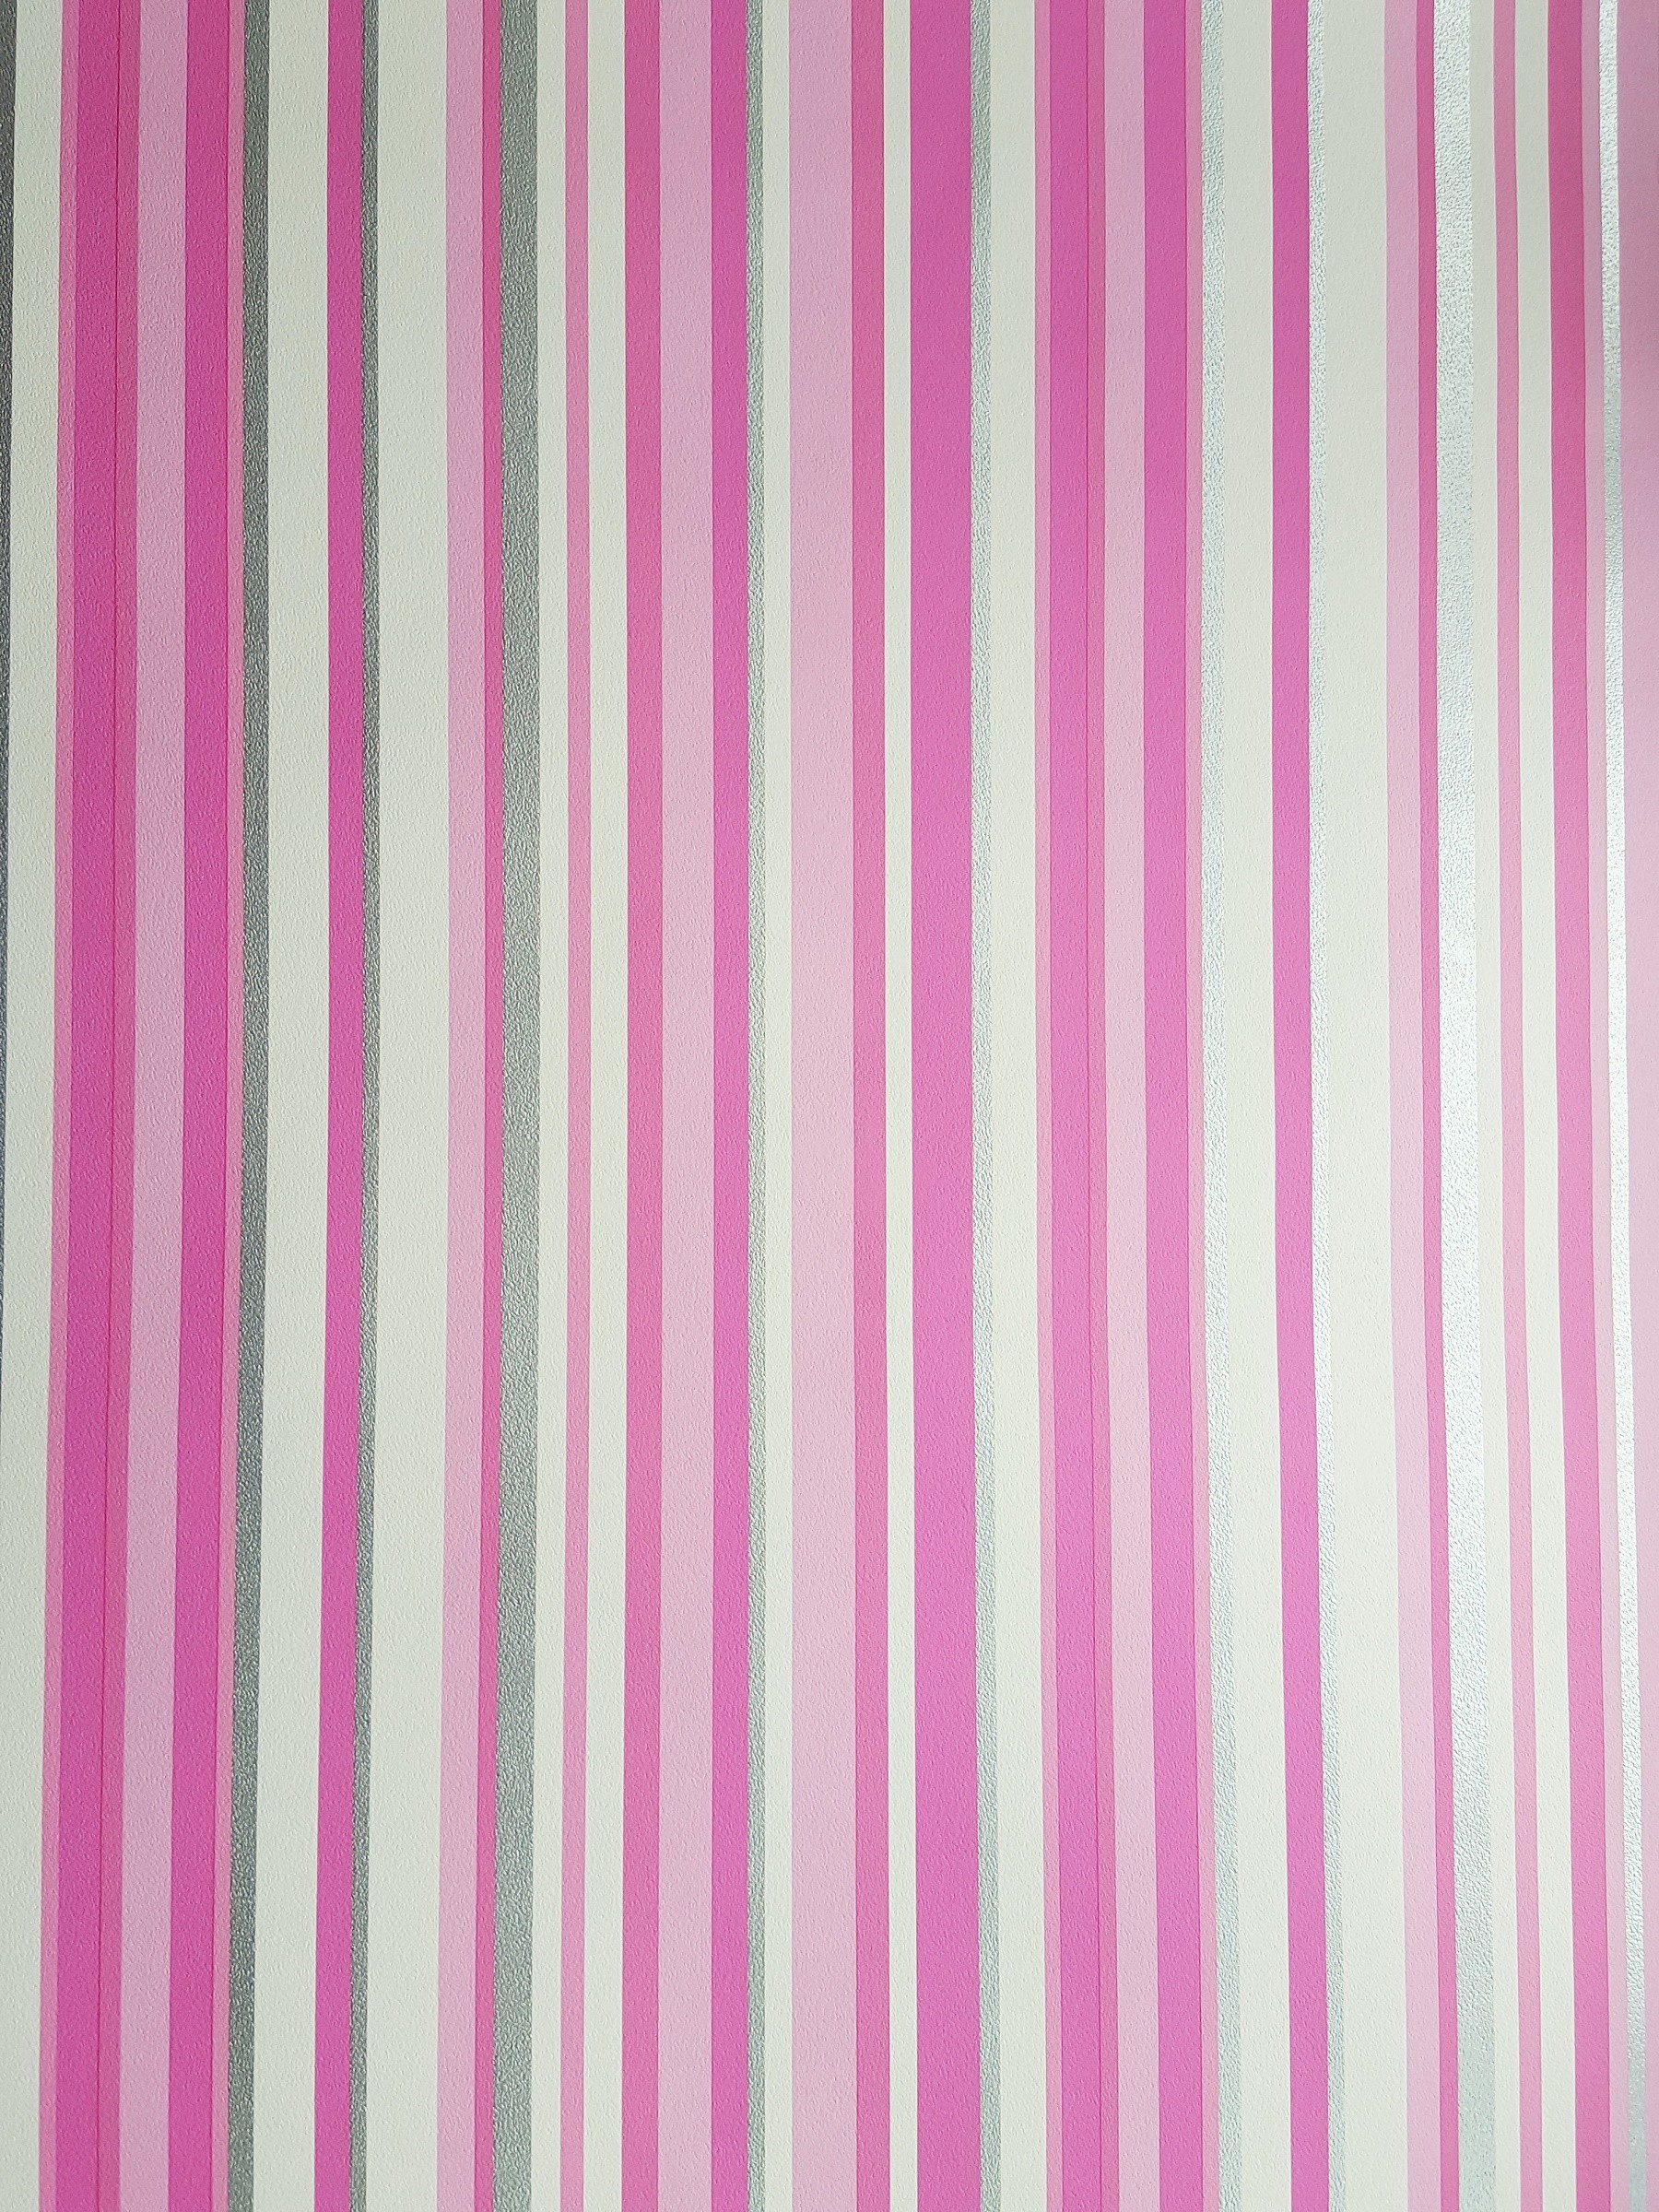 New Trend Girls Pink Silver White Barcode Stripe Wallpaper